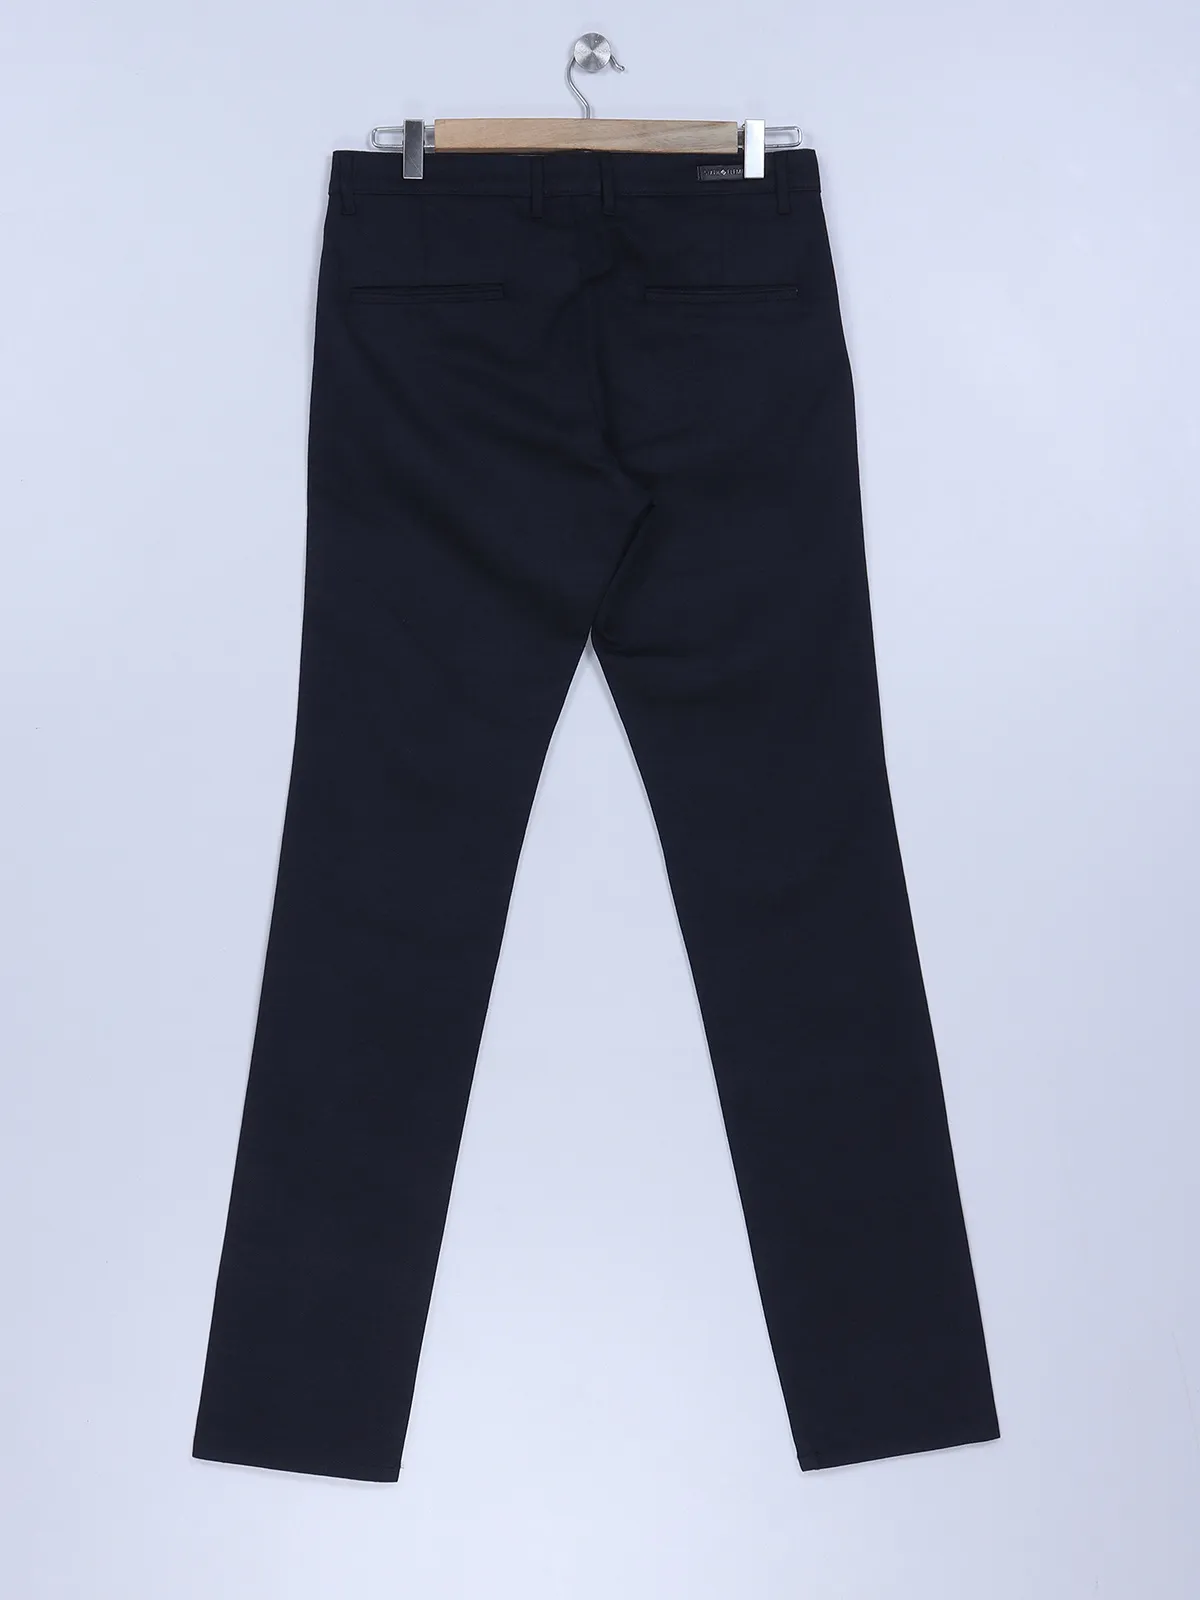 Sixth Element navy slim fit trouser